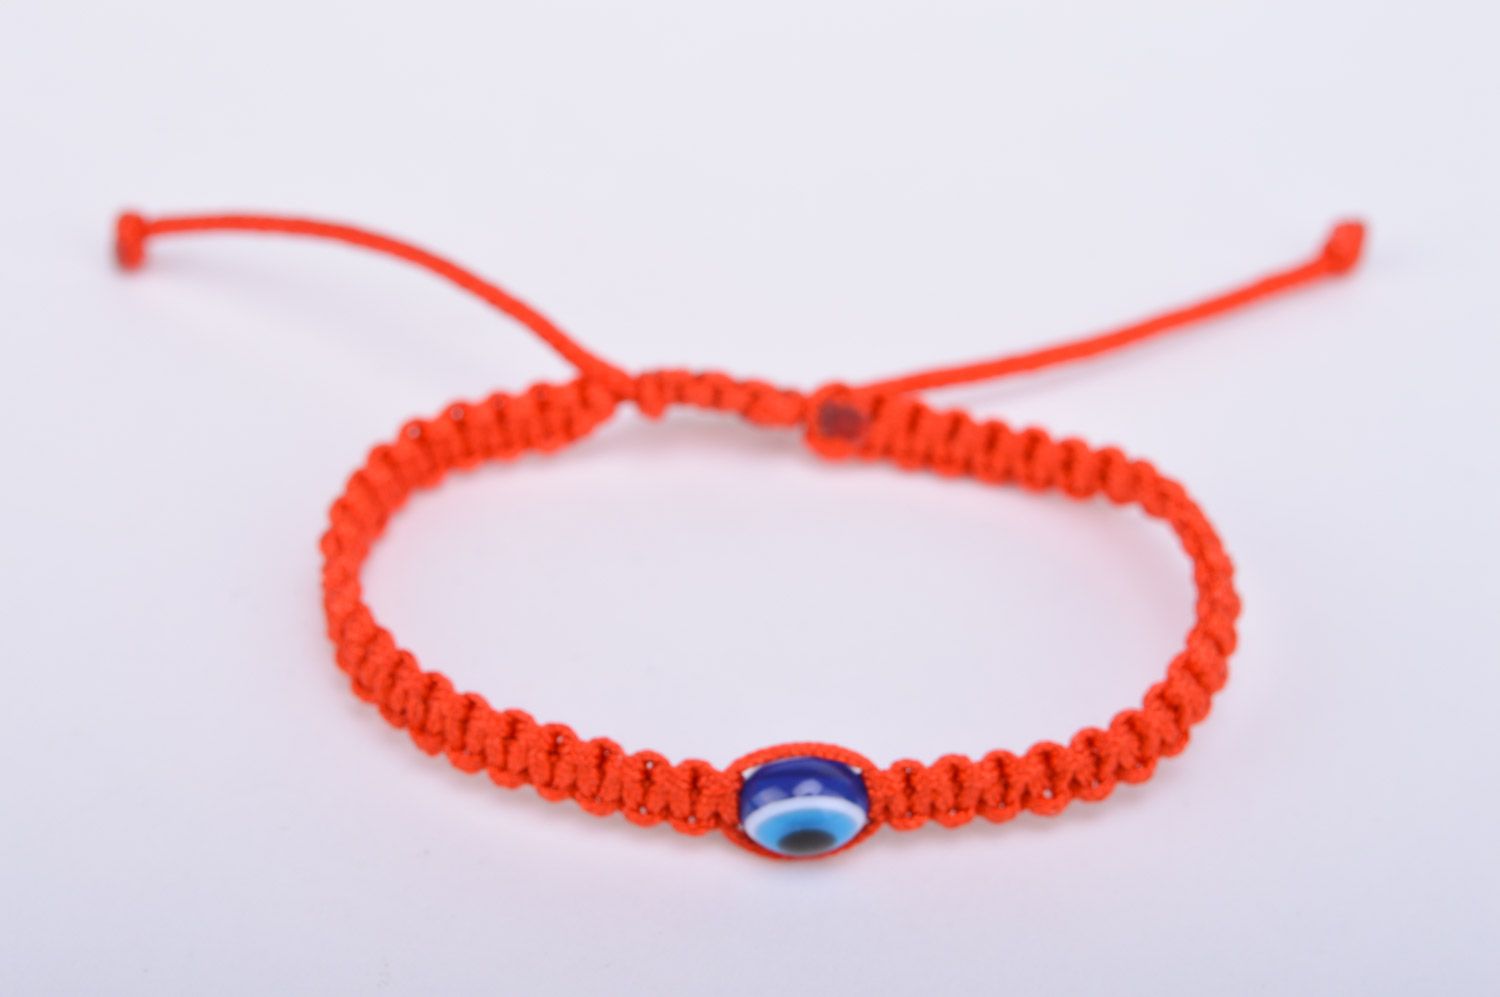 Braided handmade red wrist bracelet made of threads against the evil eye photo 2